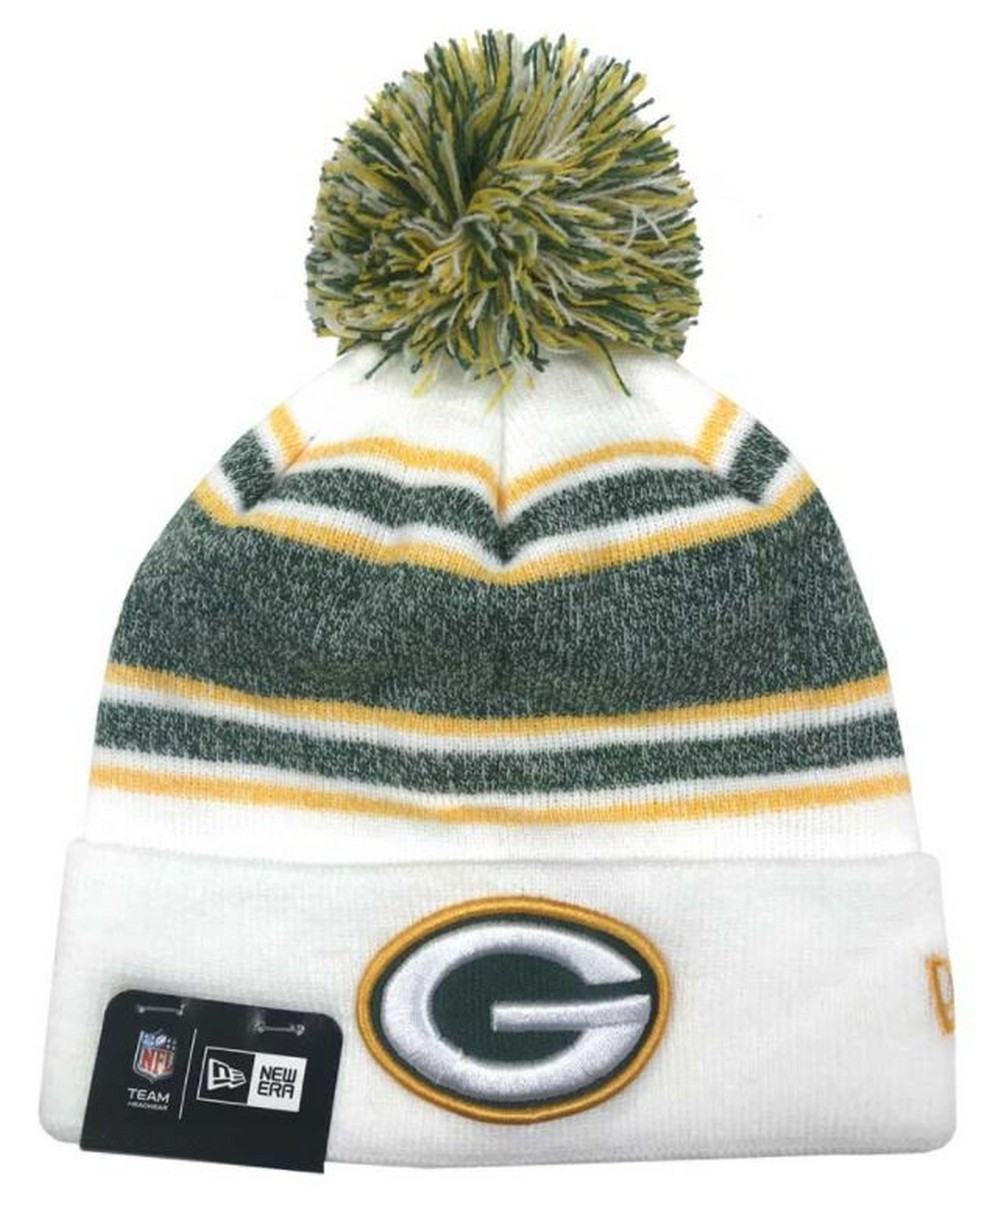 New Era Green Bay Packers NFL Stocking Knit Hat Winter Beanie Sideline